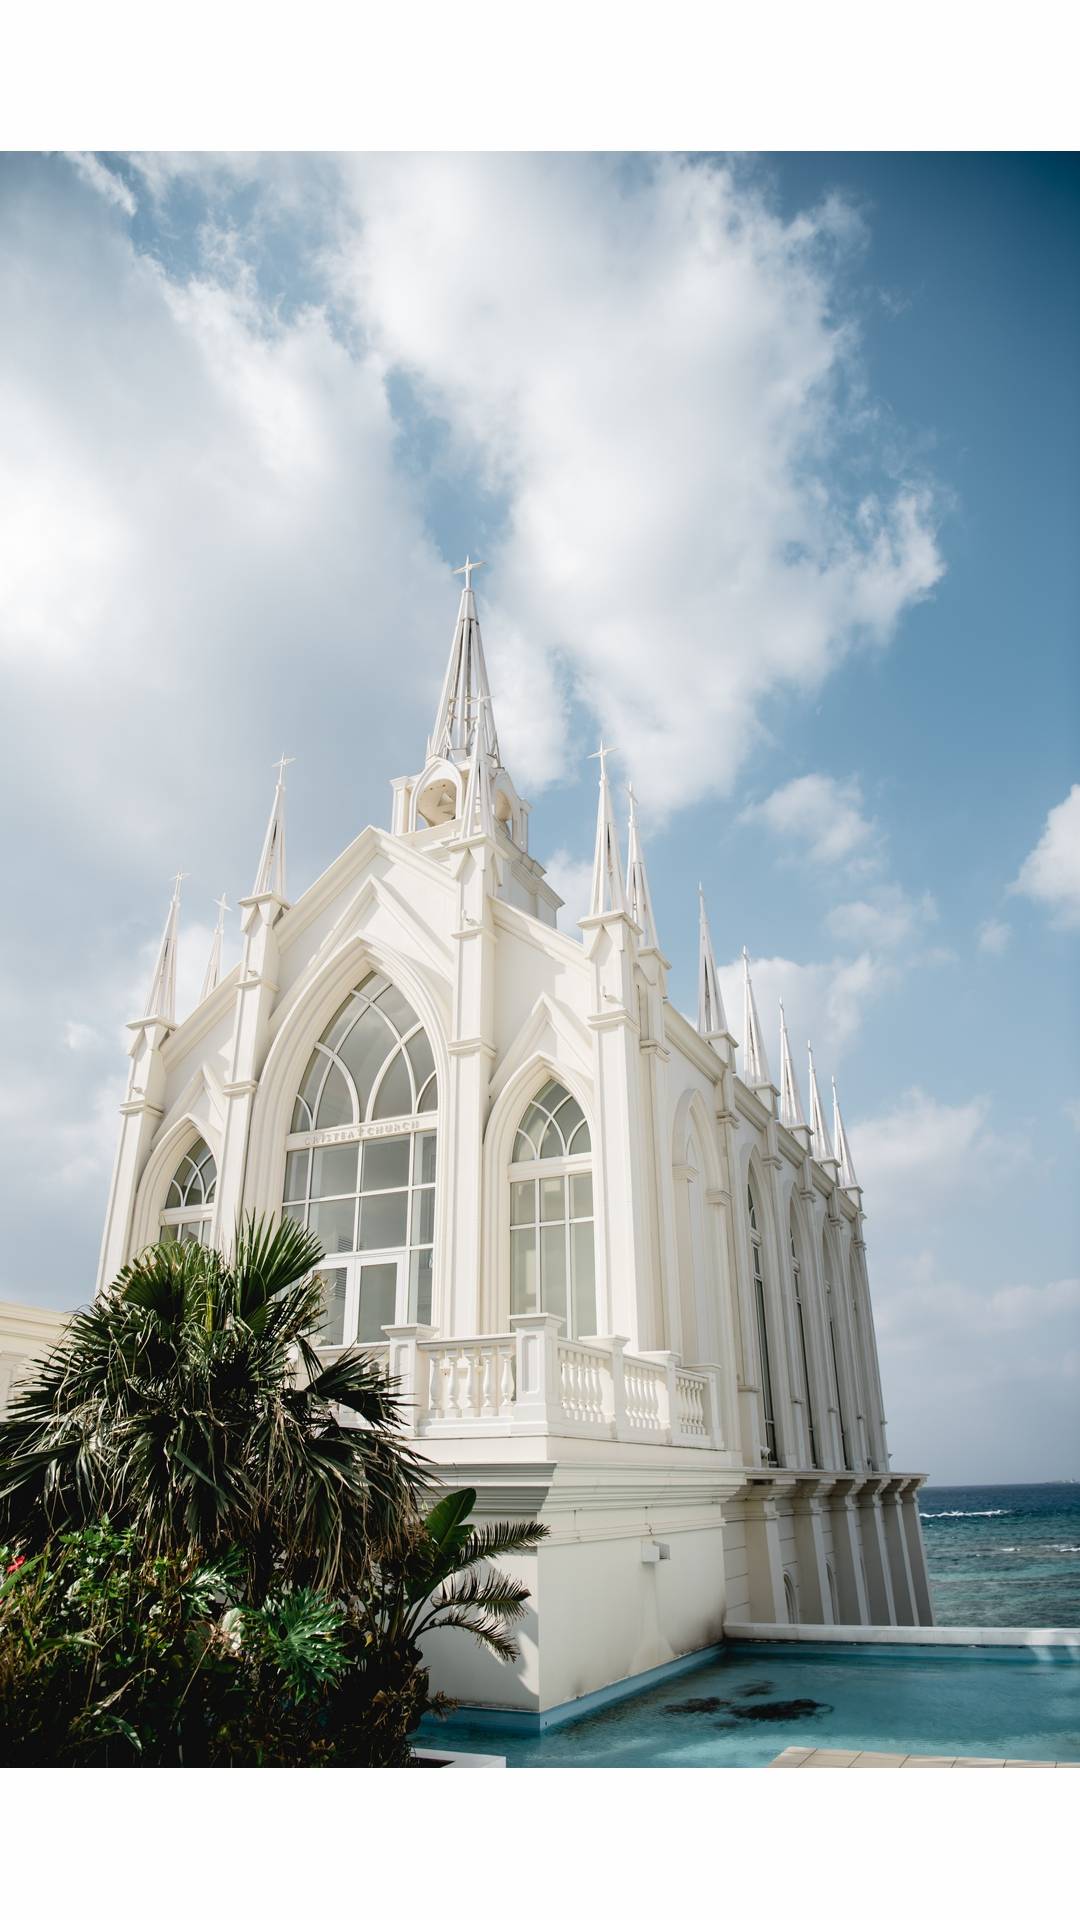 沖繩,okinawa wedding,克麗絲蒂教堂,Lazor Garden Alivila Cristea Church,婚攝推薦,海外婚禮